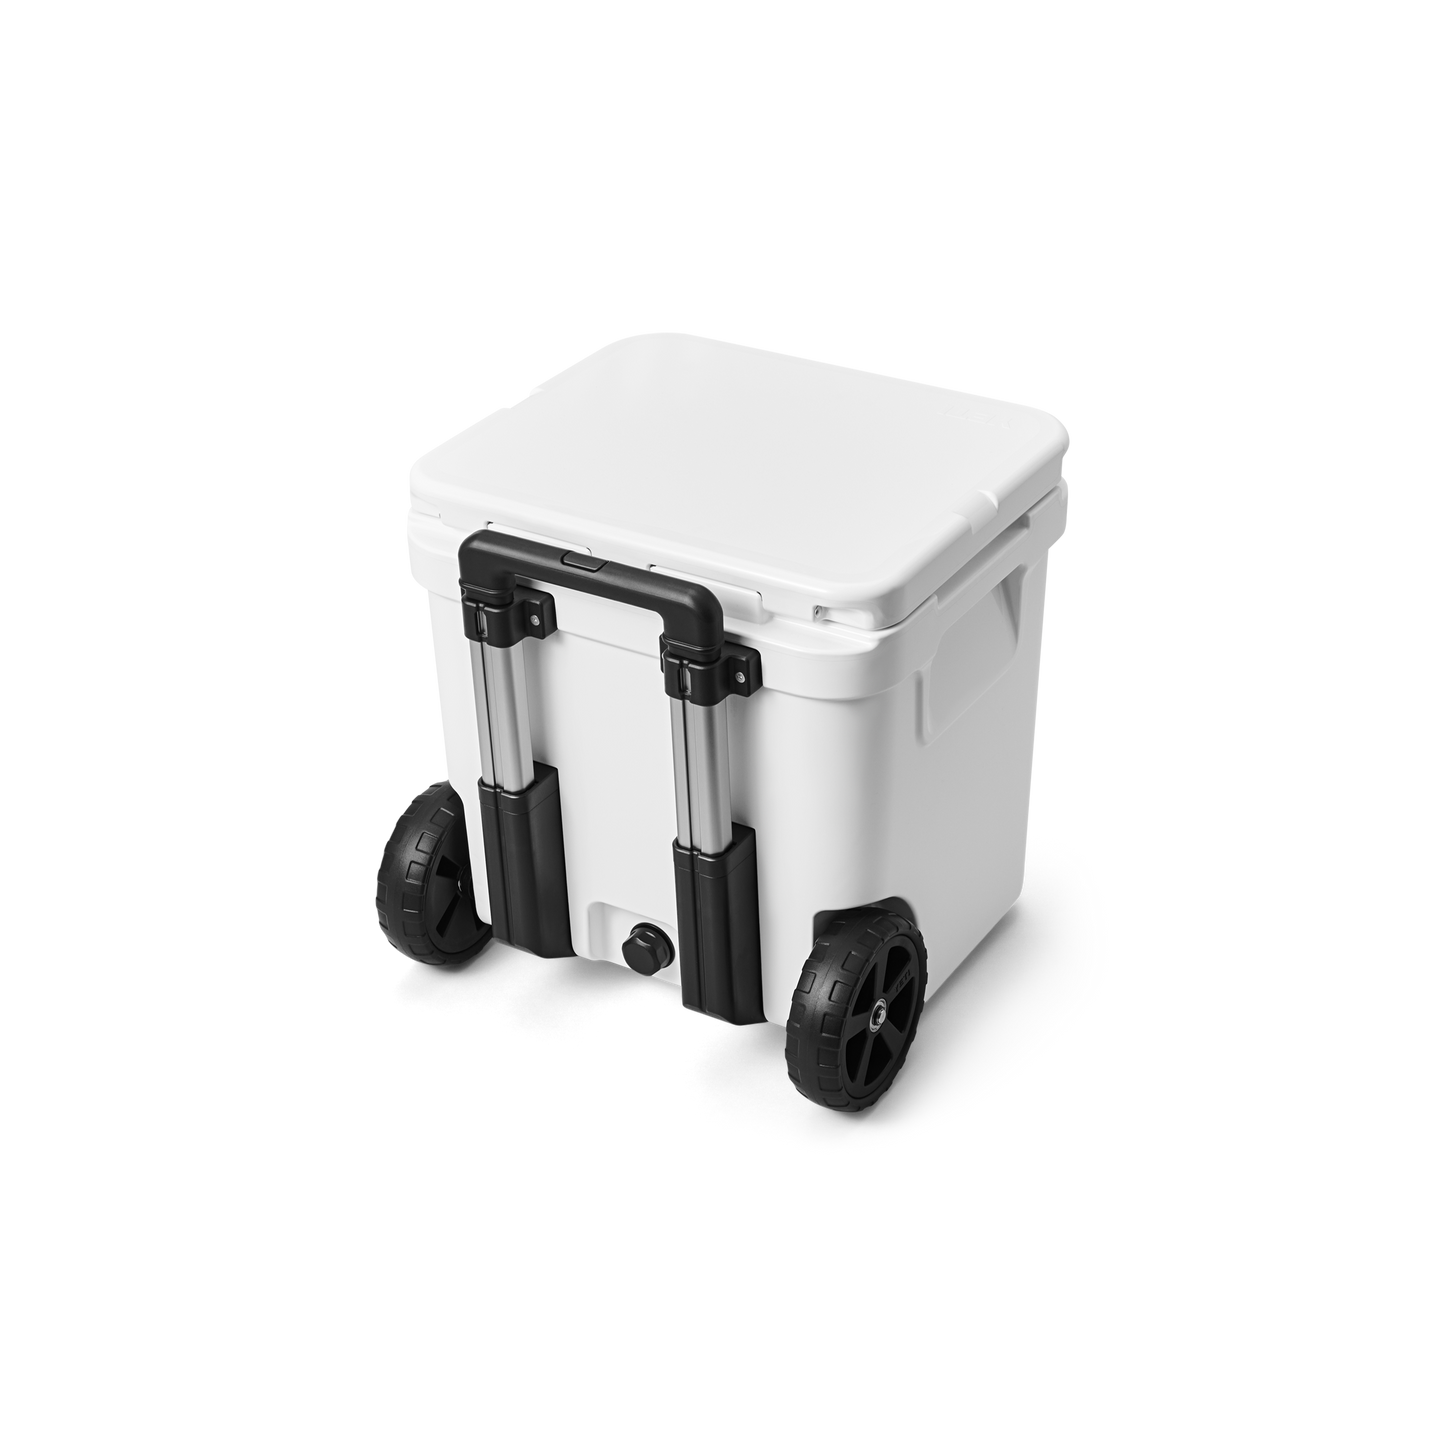 YETI Roadie® 48 Wheeled Hard Cooler White